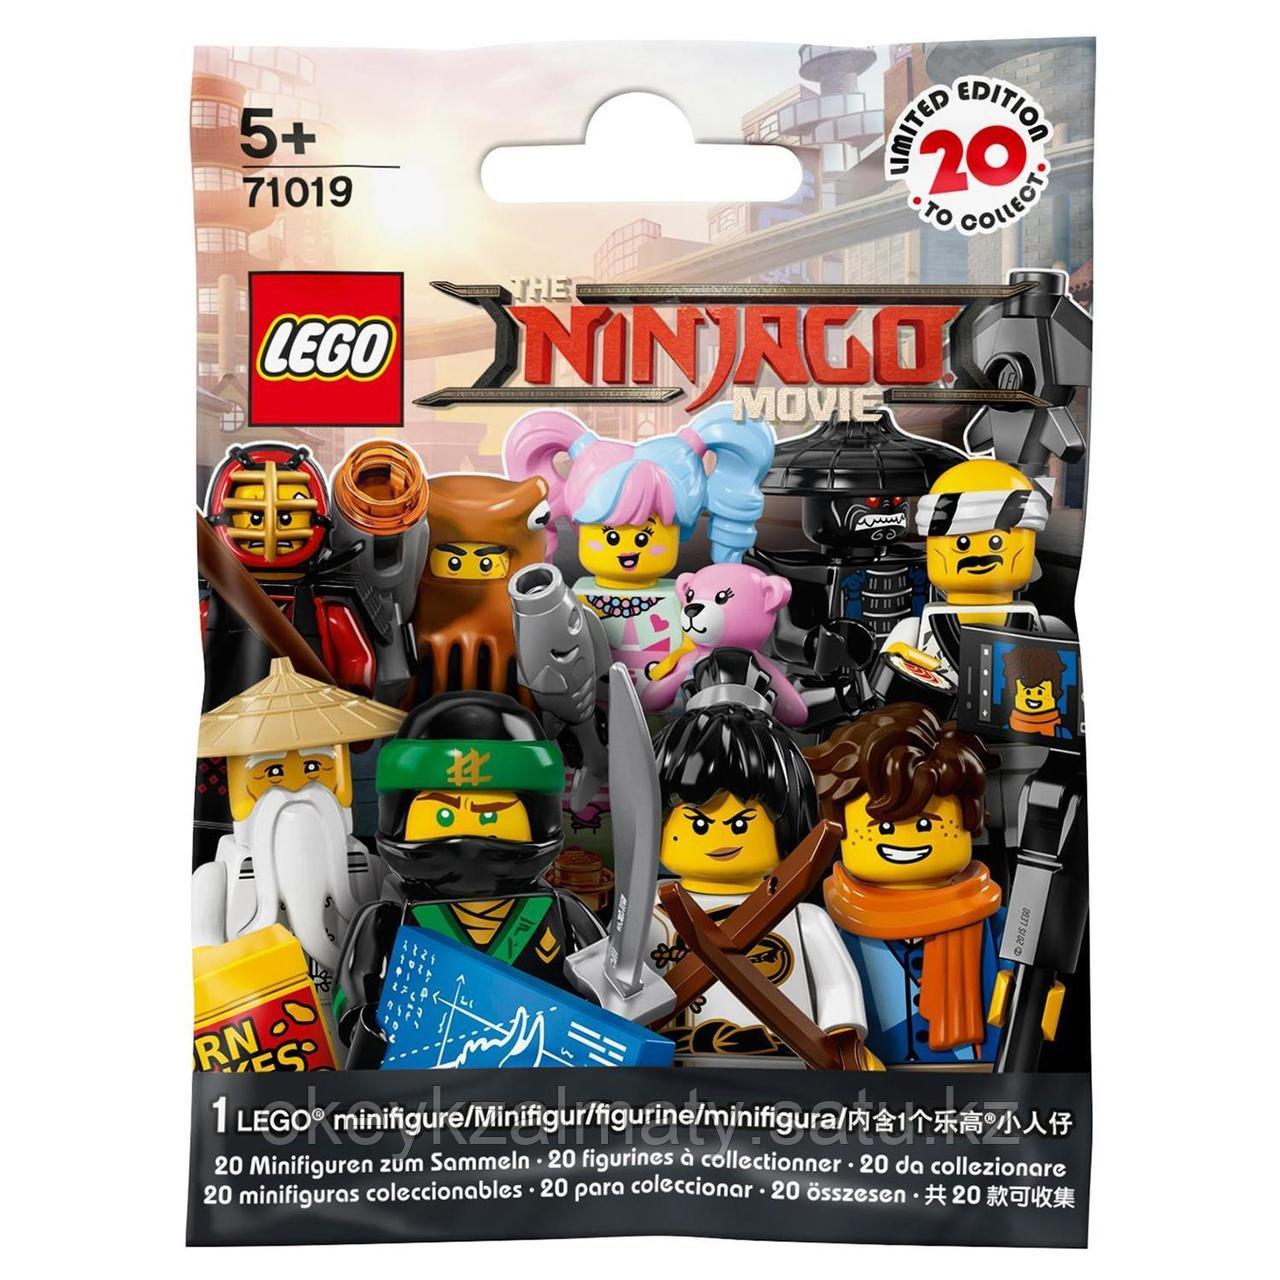 LEGO Minifigures: Минифигурки серия Ninjago Movie в ассортименте 71019